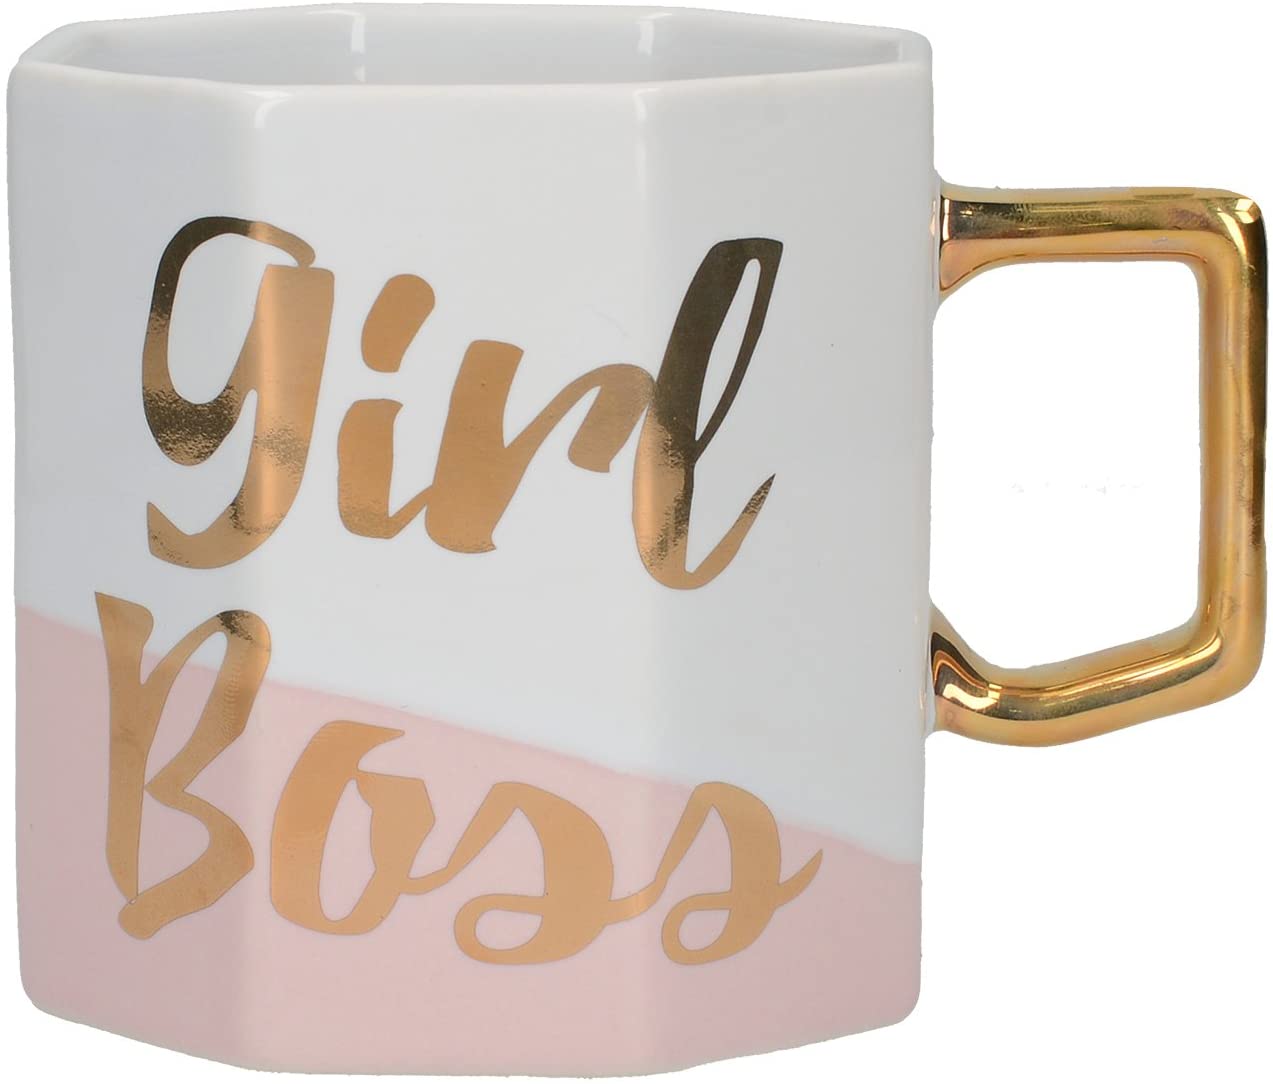 CREATIVE TOPS Girl Boss Octagonal Mug, Ceramic, Multi-Colour, 12.5 x 8.5 x 9.3 cm